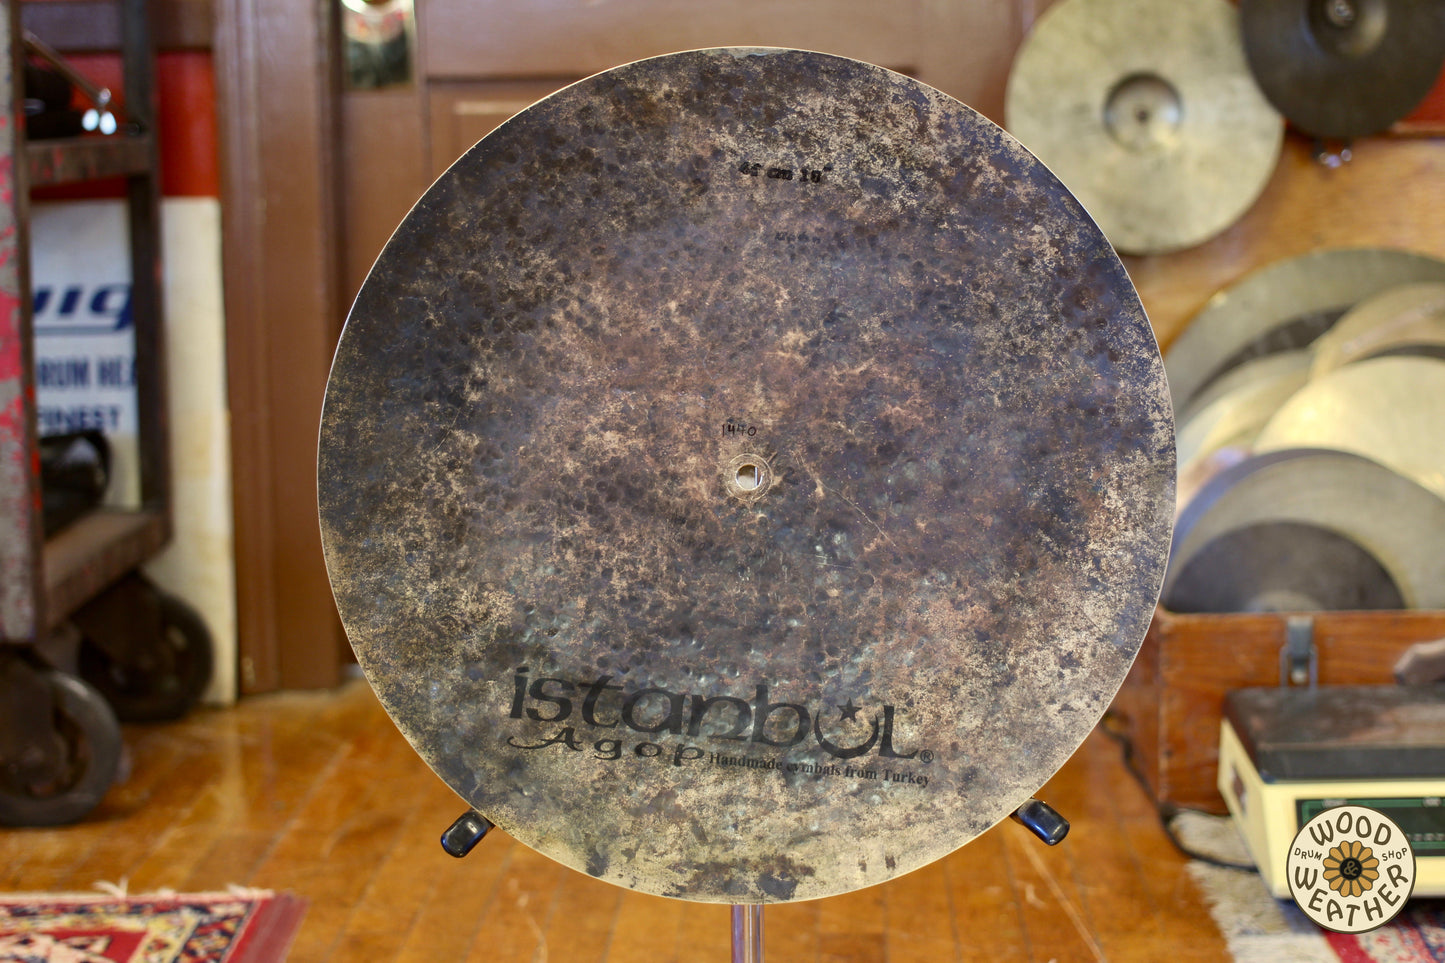 USED Istanbul Agop 18" Turk Flat Ride Cymbal 1440g